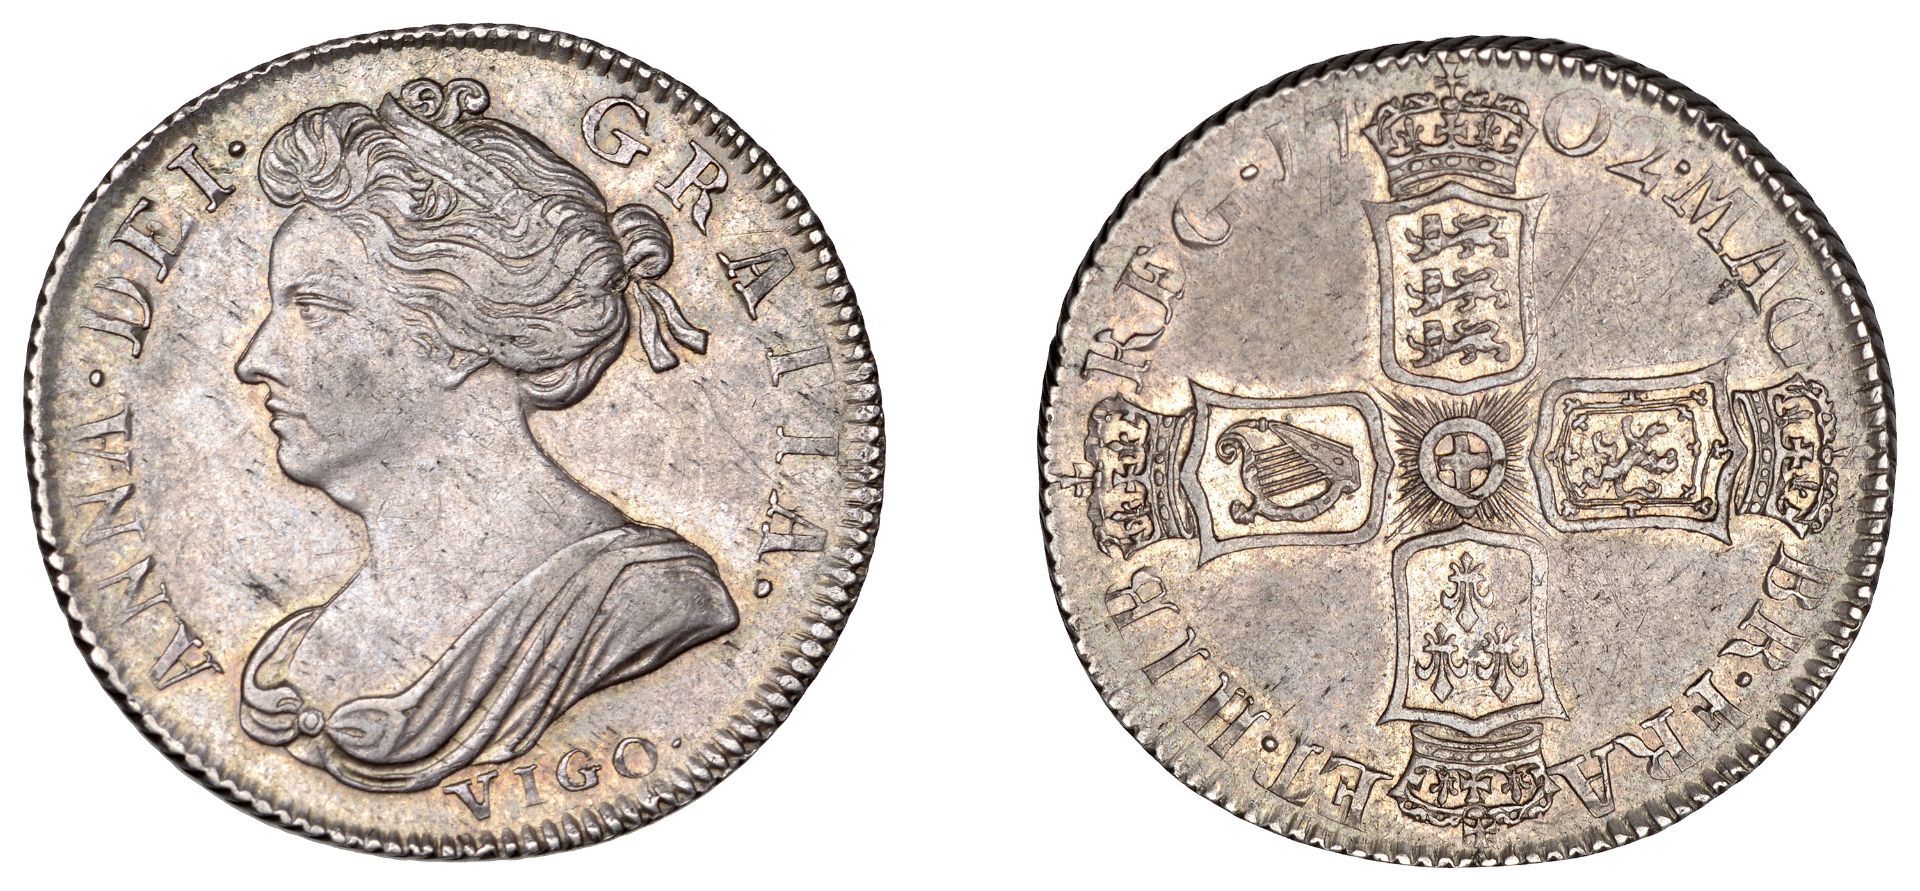 Anne (1702-1714), Shilling, 1702 vigo (ESC 1387; S 3585). About extremely fine, toned Â£600-...